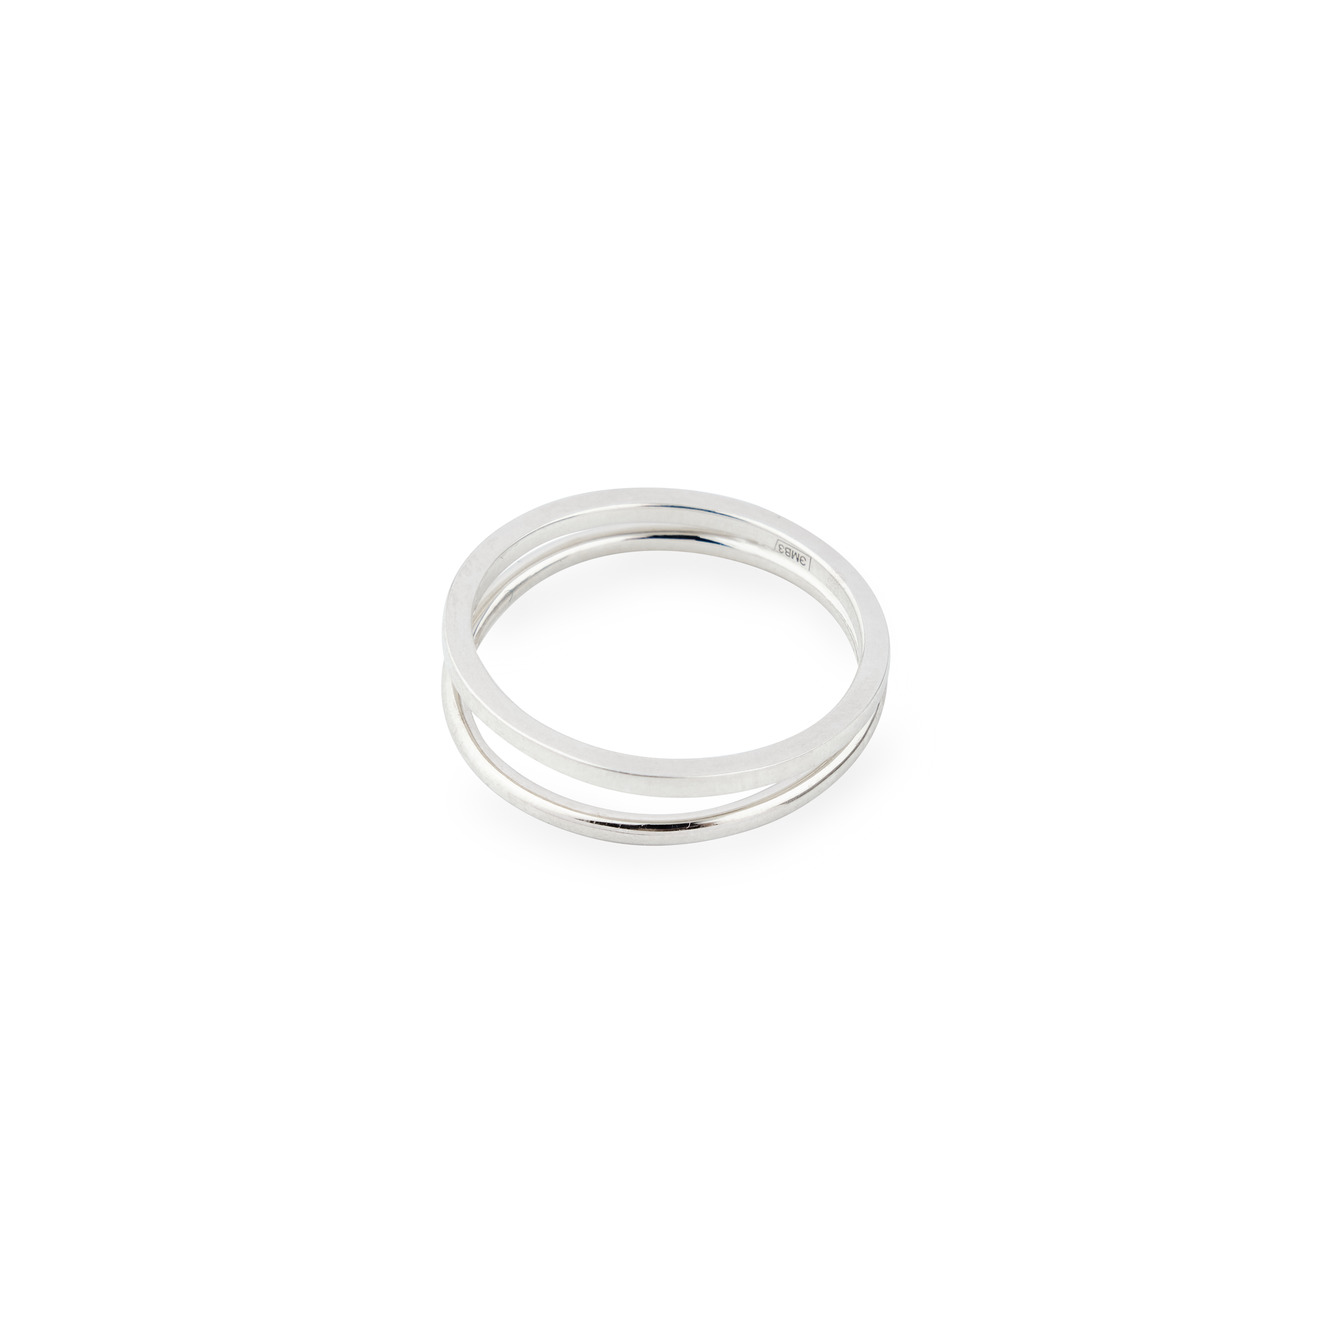 Ms. Marble Двойное кольцо из серебра Karma phosphor двойное кольцо из серебра sc